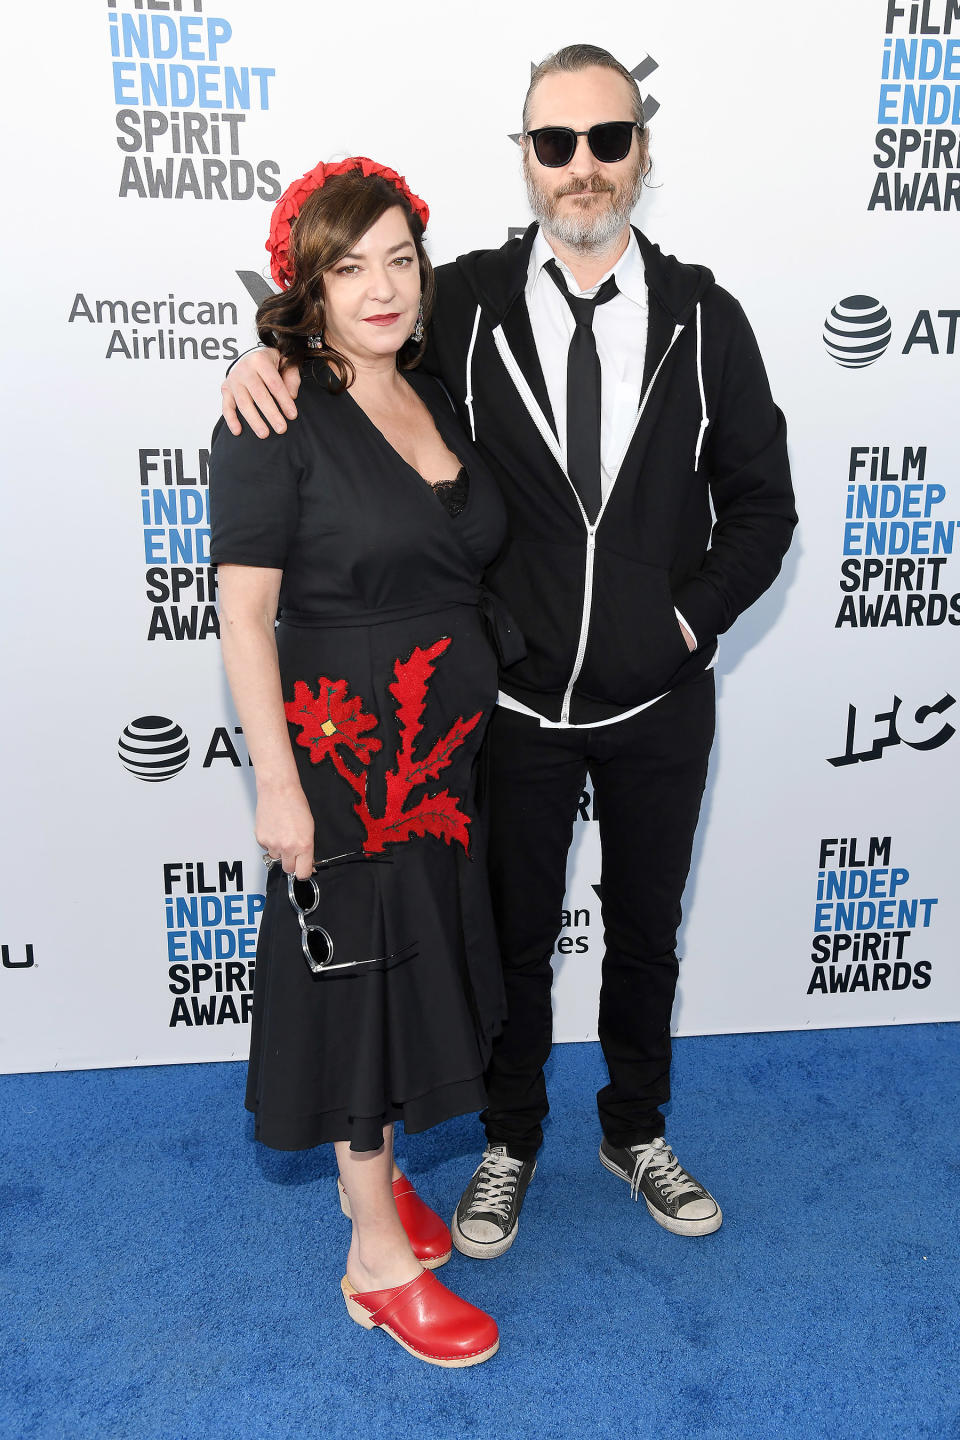 Lynne Ramsay and Joaquin Phoenix